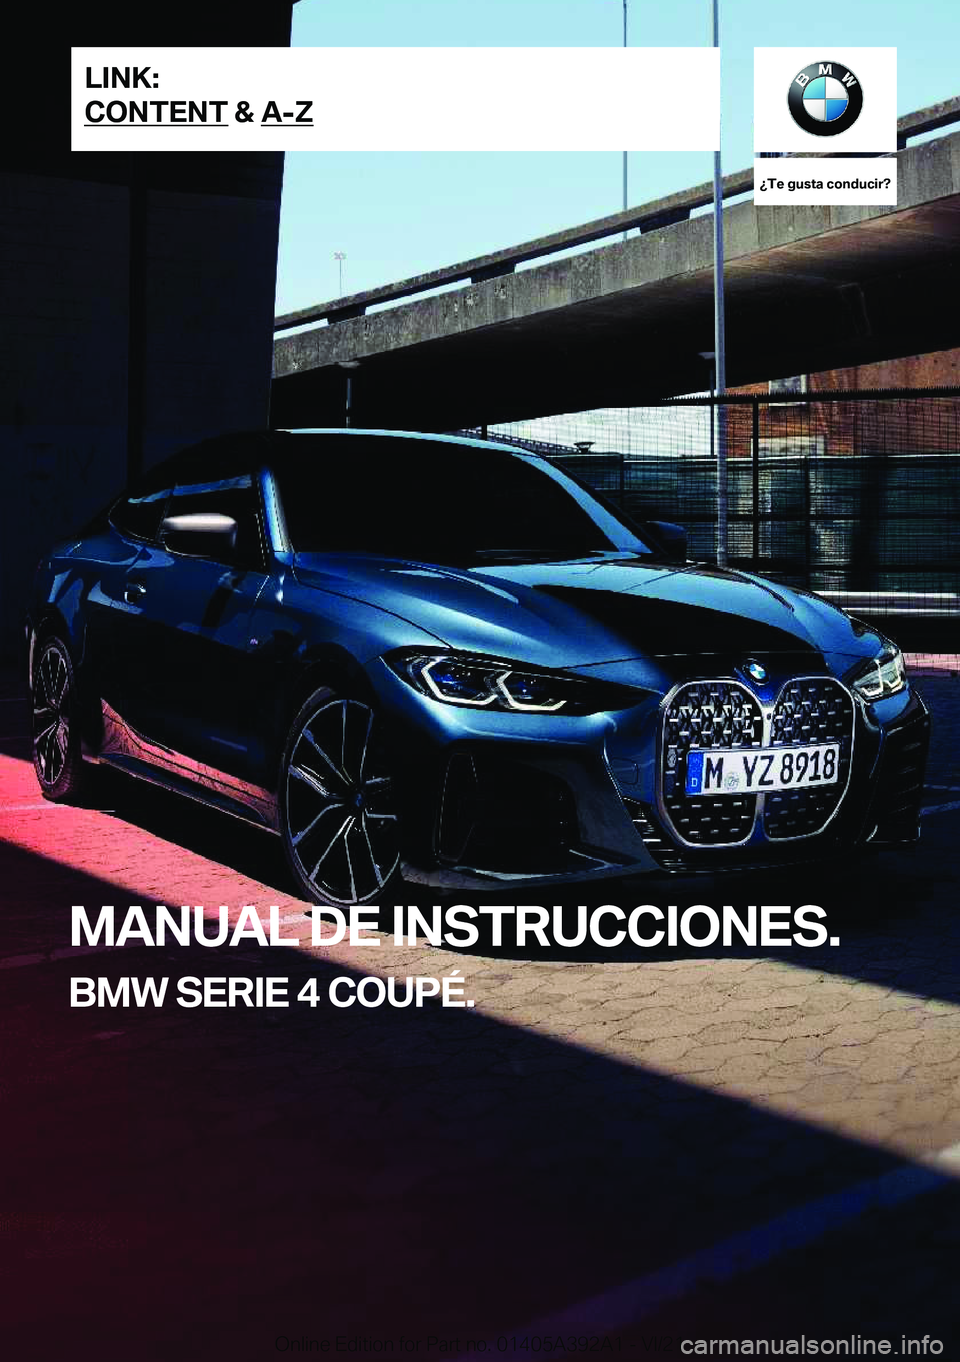 BMW 4 SERIES 2022  Manuales de Empleo (in Spanish) ��T�e��g�u�s�t�a��c�o�n�d�u�c�i�r� 
�M�A�N�U�A�L��D�E��I�N�S�T�R�U�C�C�I�O�N�E�S�.
�B�M�W��S�E�R�I�E��4��C�O�U�P�